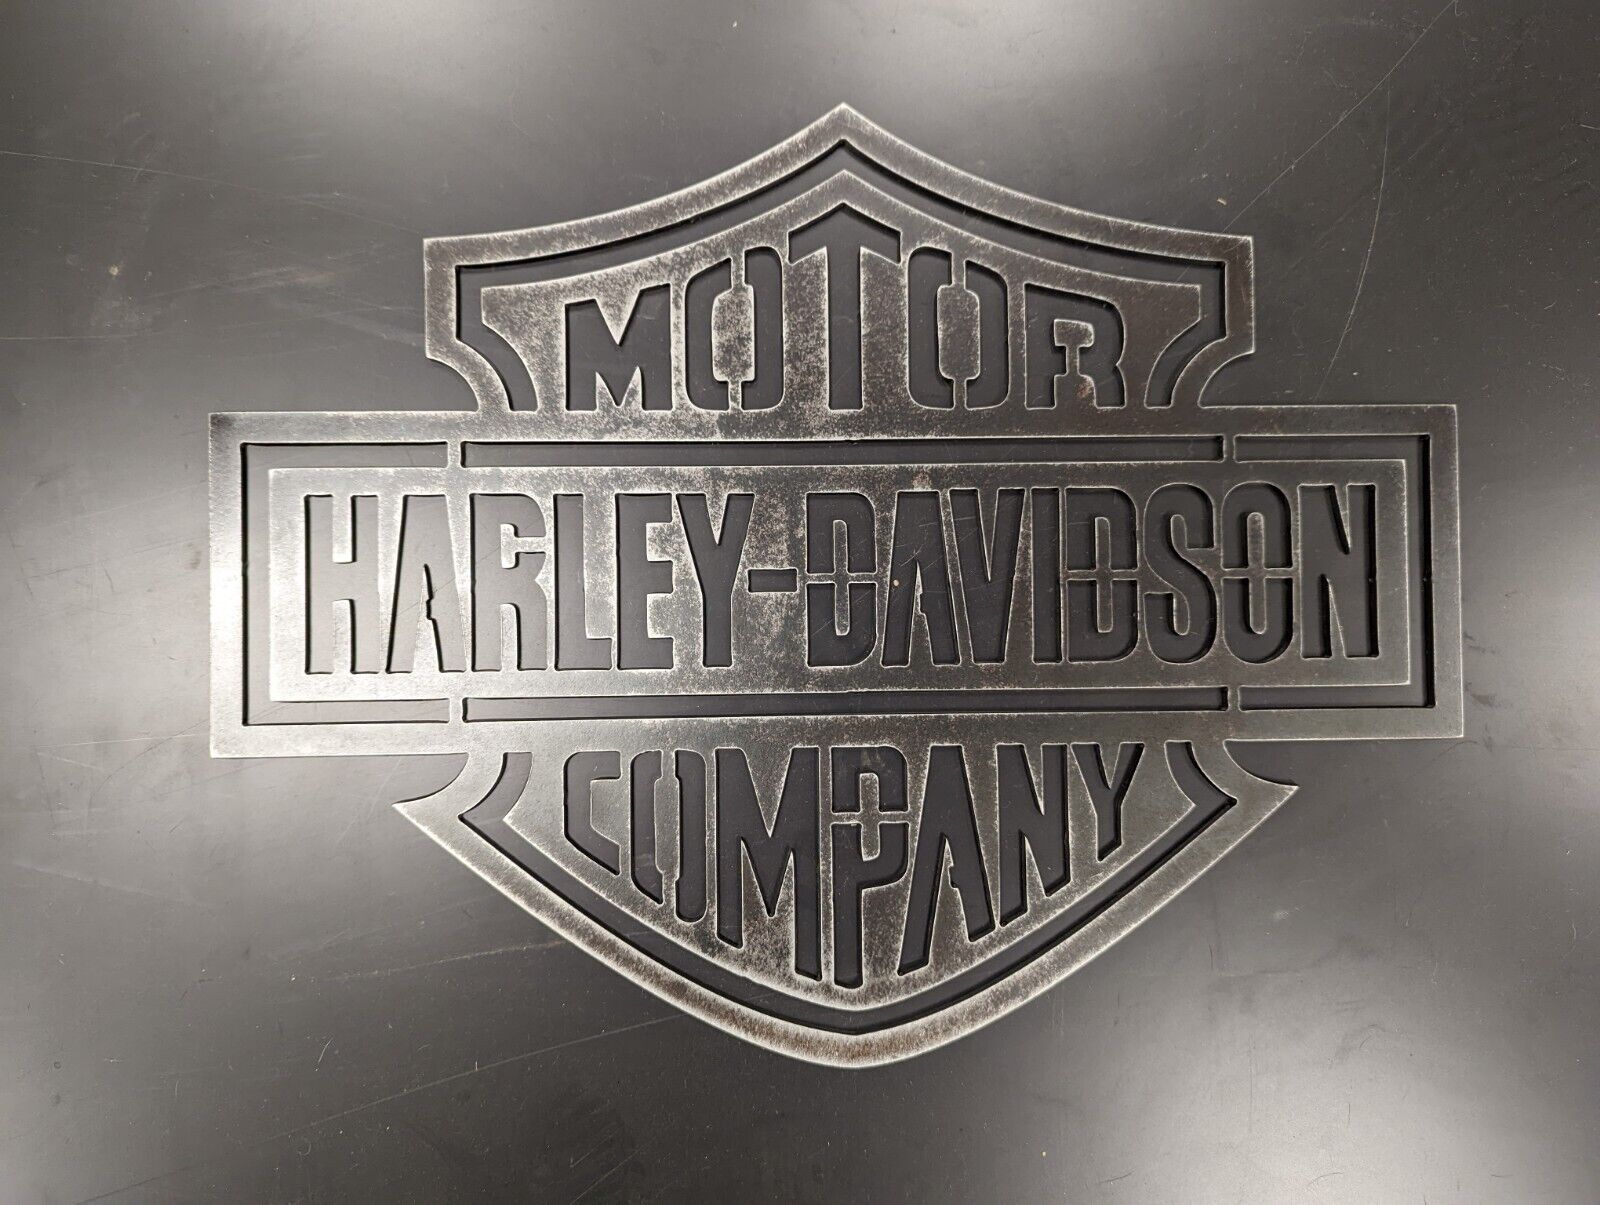 Vintage Harley Davidson Motorcycle Sign THICK 17